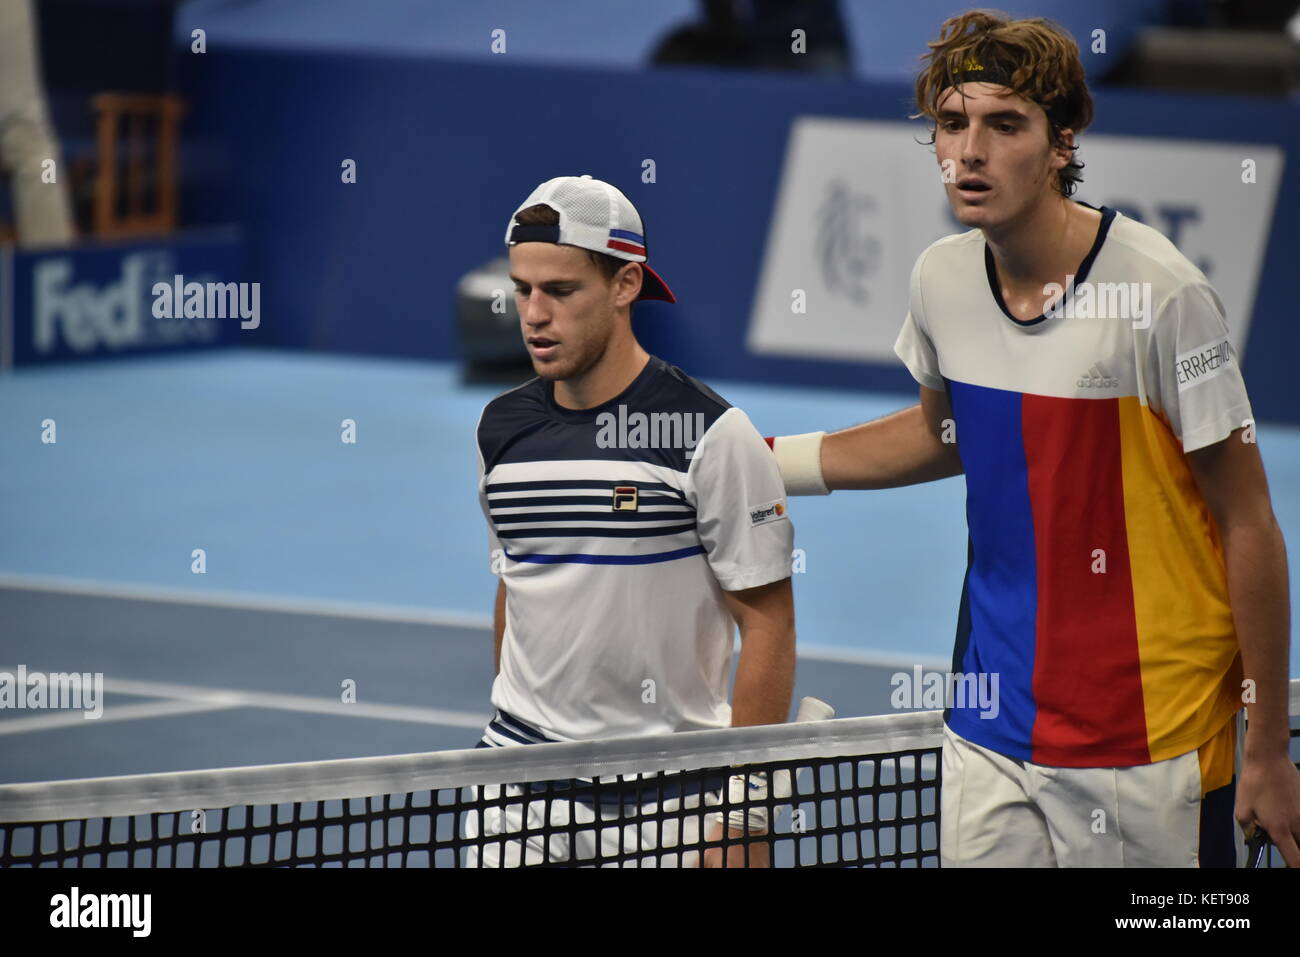 European Open - ATP World Tour 250 Series - Antwerp Belgium Stock Photo